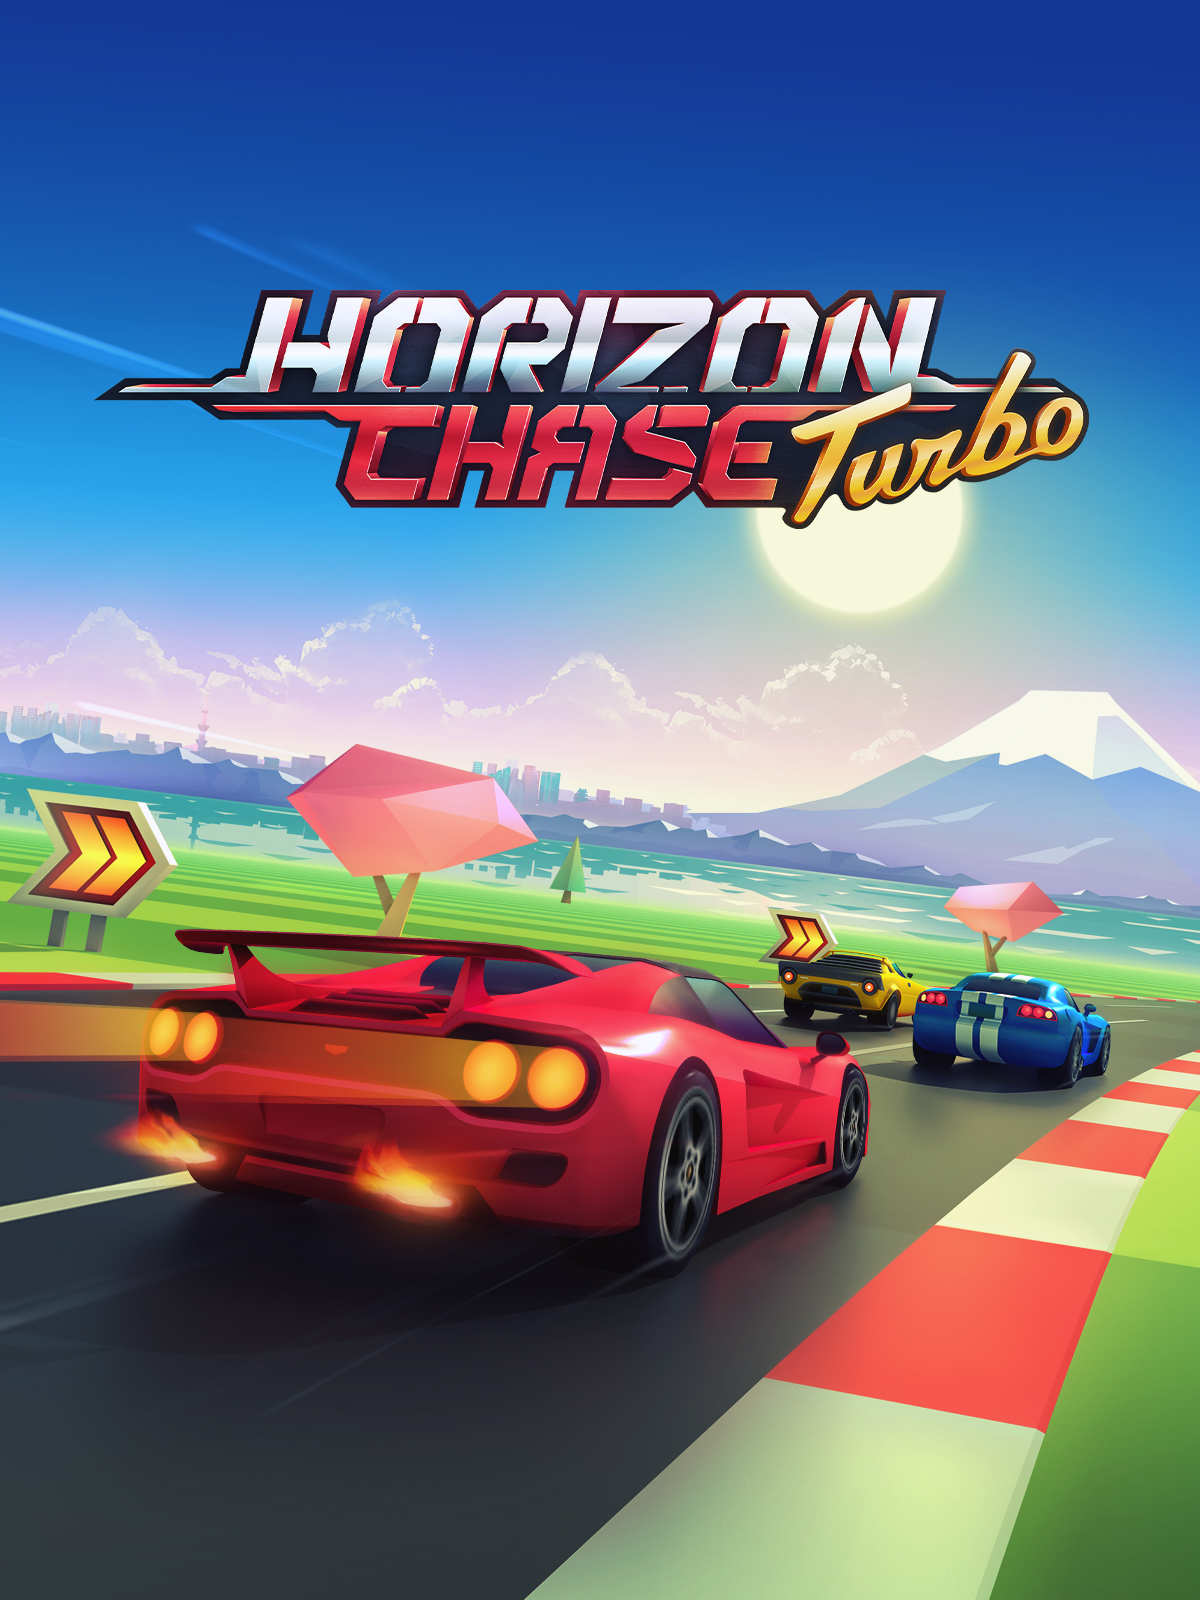 Horizon Chase Turbo (Общий, офлайн)